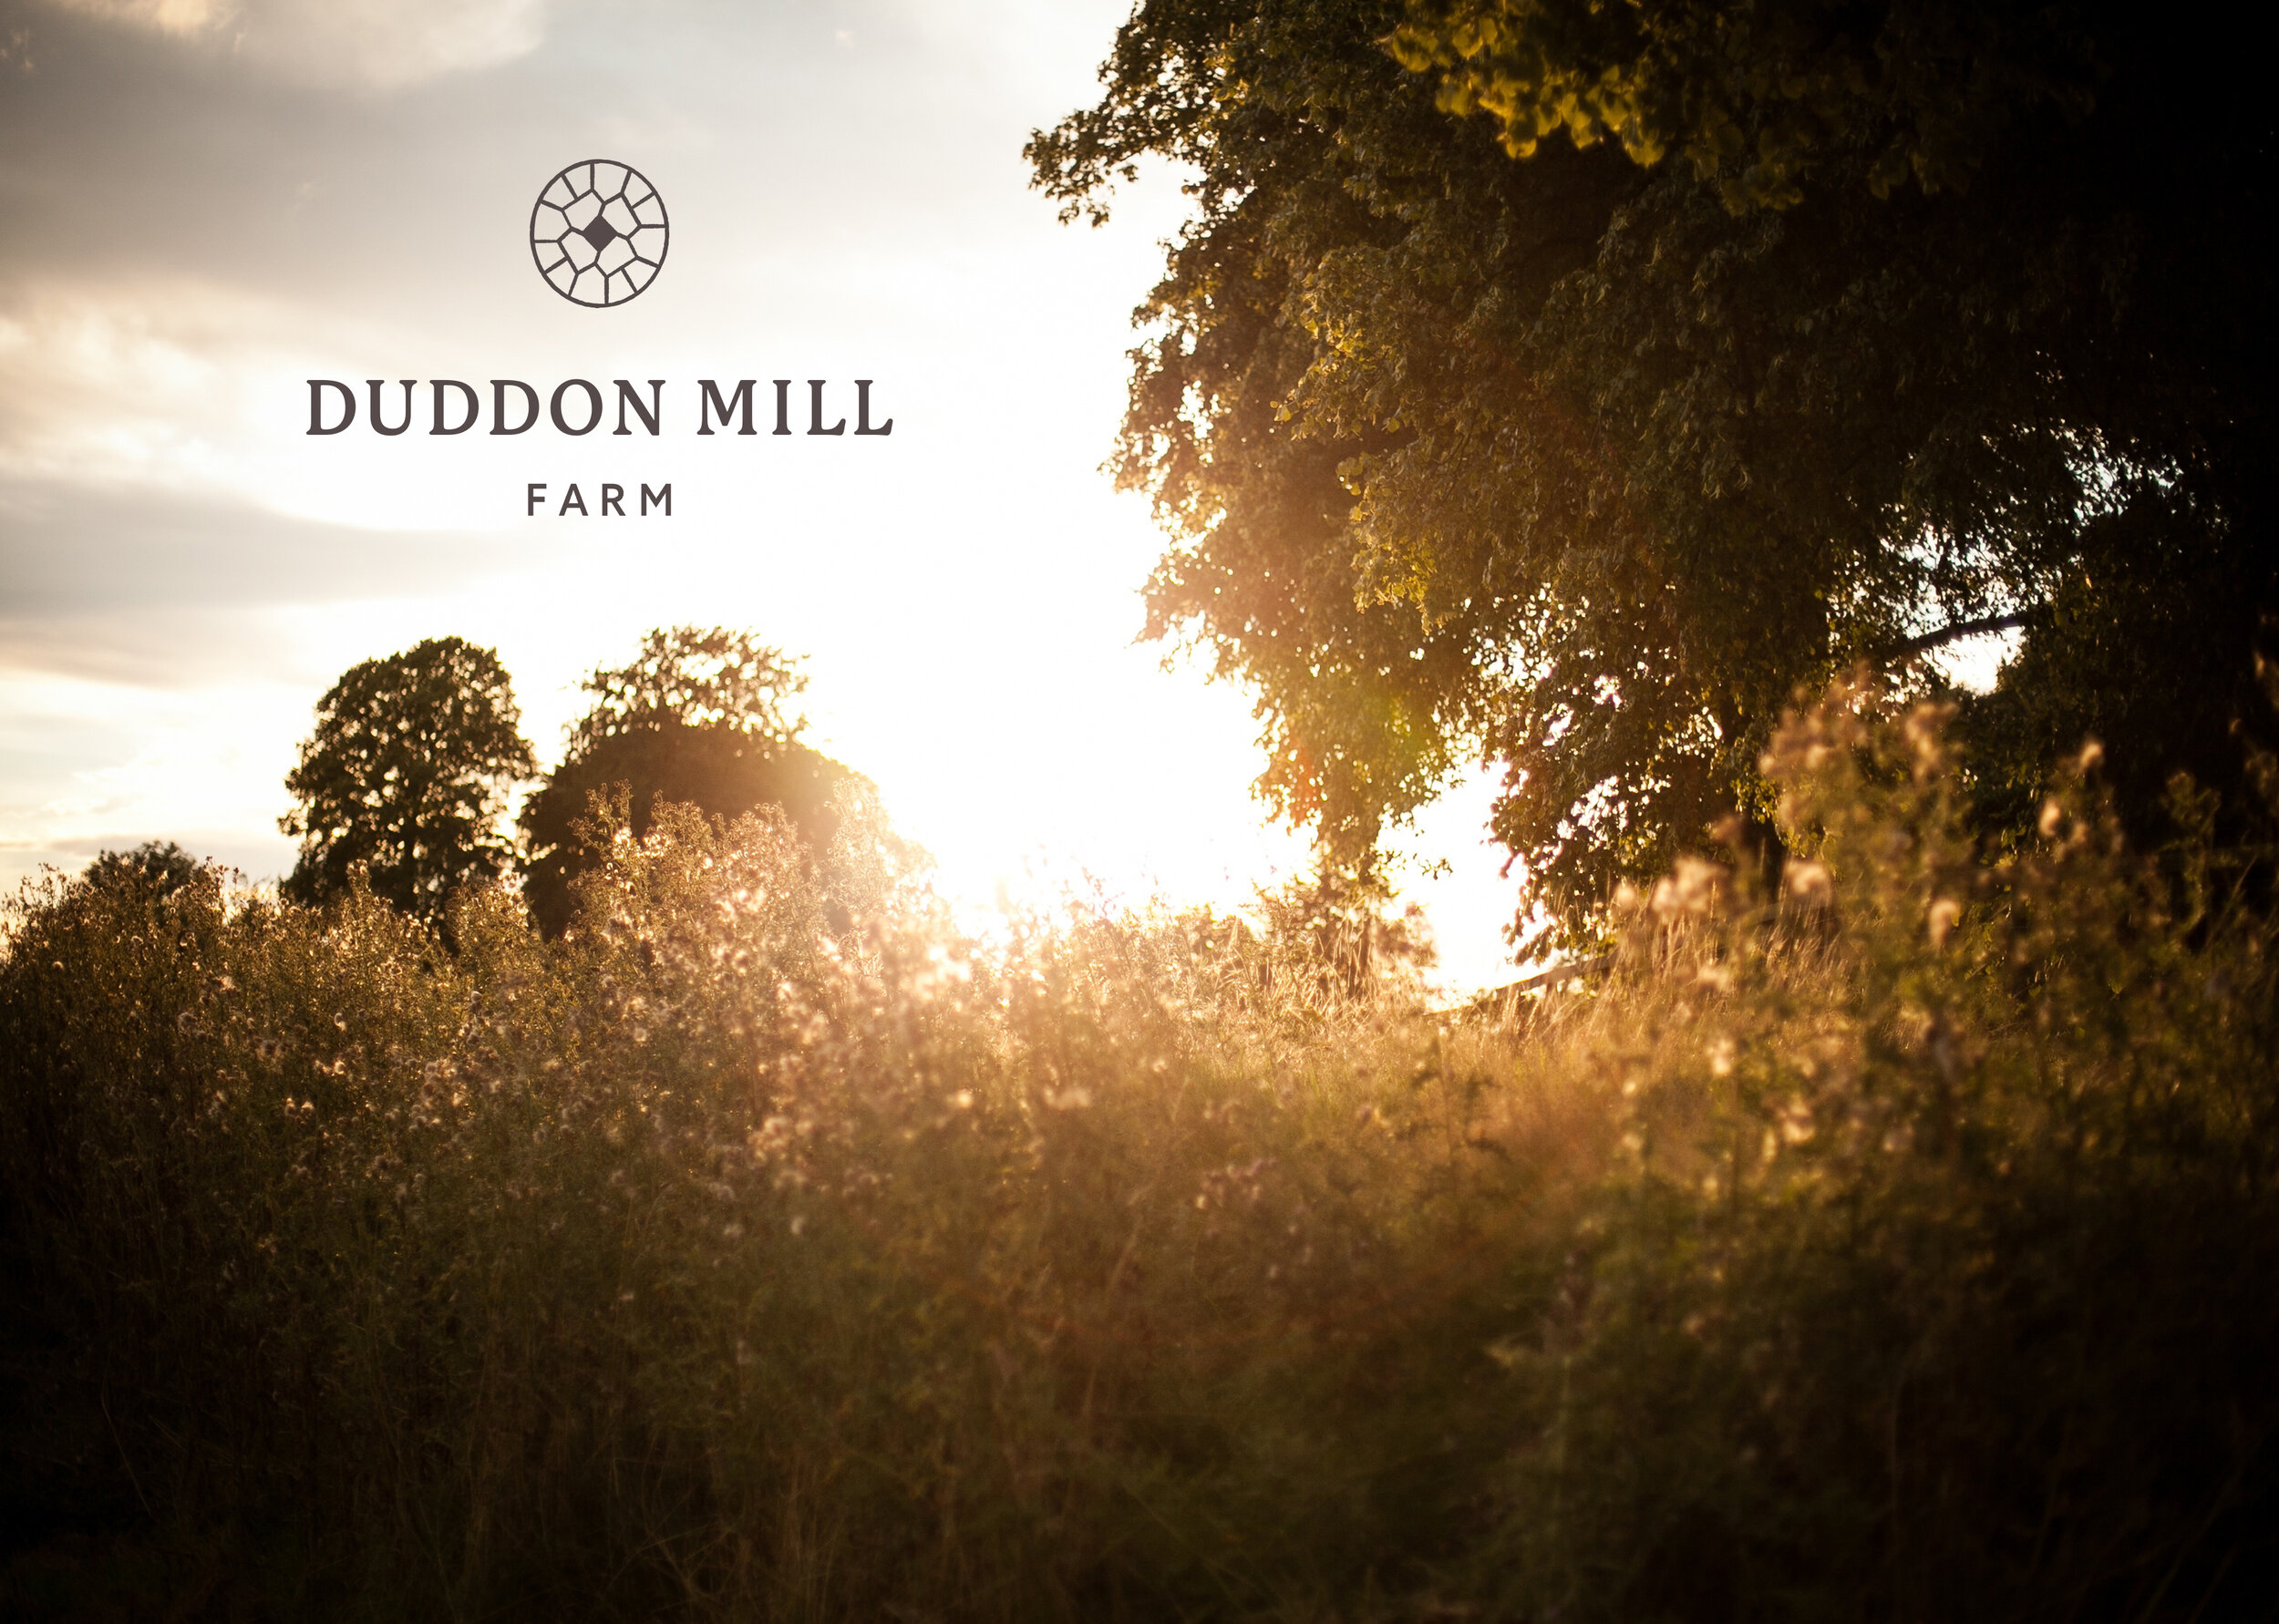 Duddon-Mill-Farm-Brochure-page-1.jpg